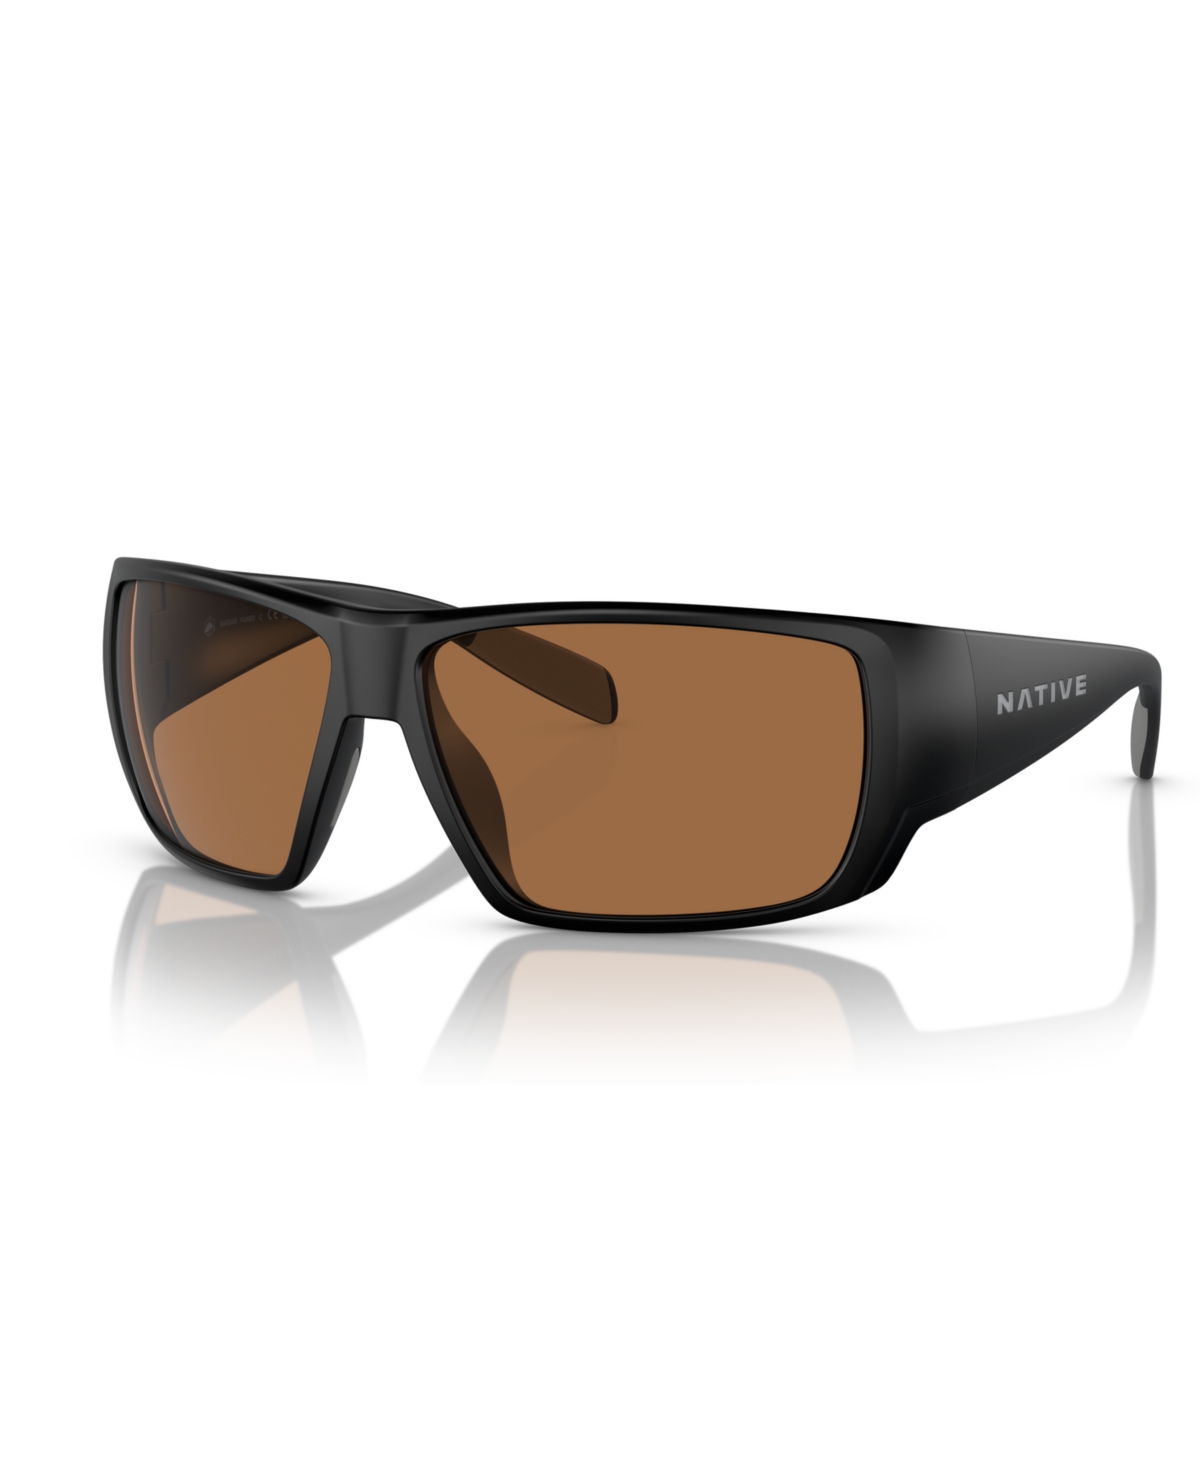 Native Men's Sightcaster Polarized Sunglasses, Polar XD9021 - Matte Black